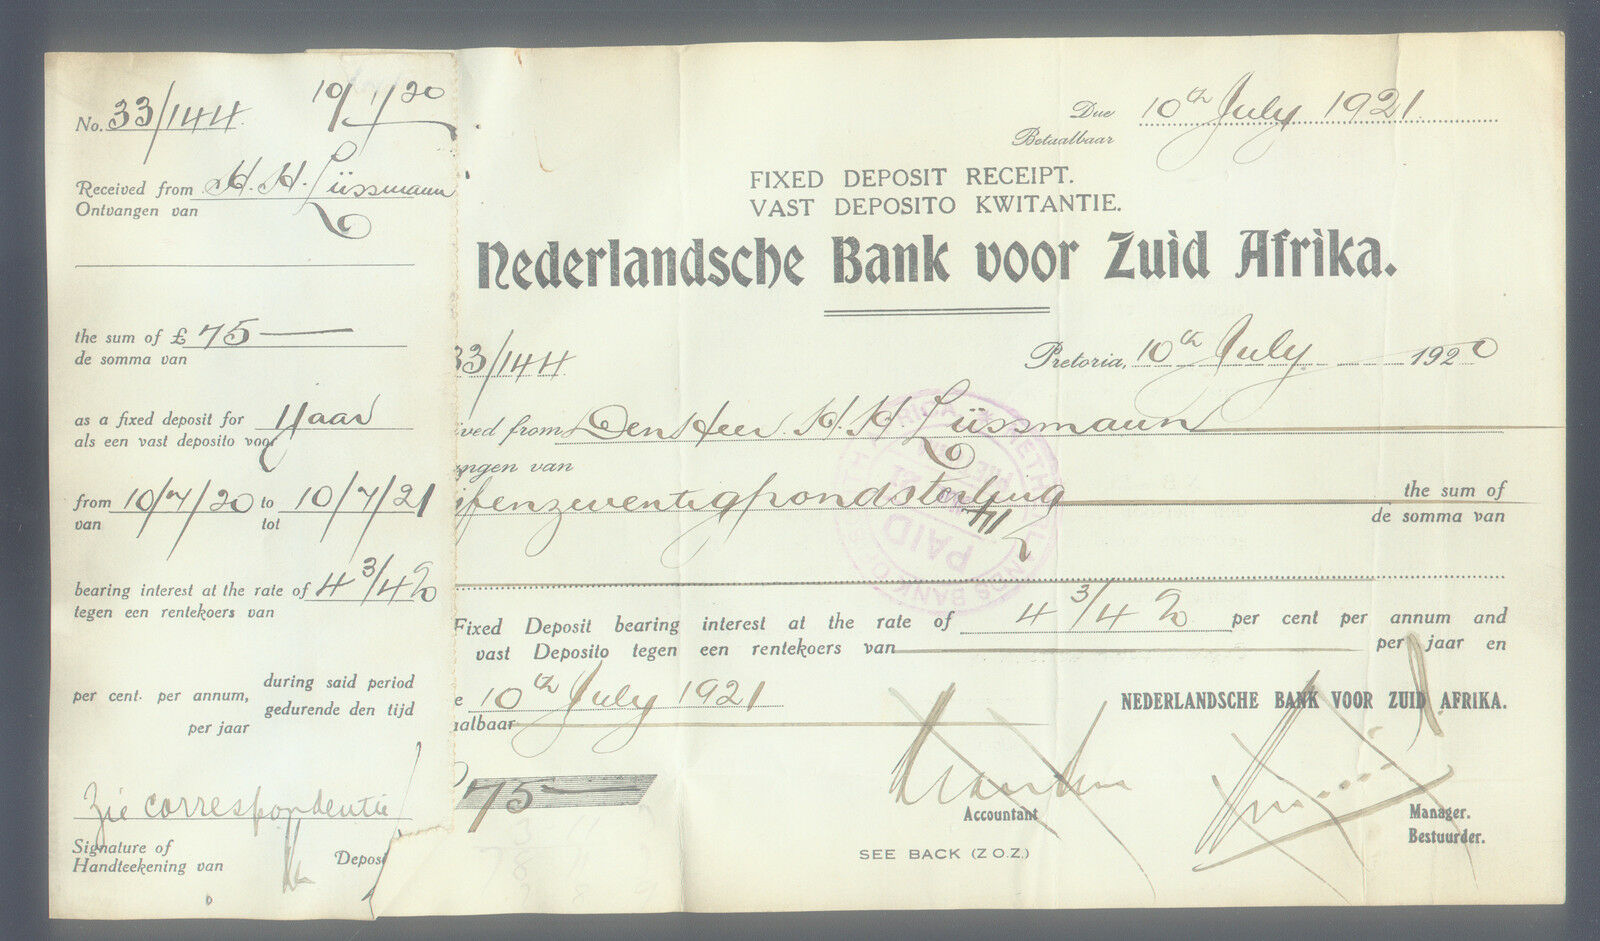 SOUTH AFRICA NEDERLANDSCHE BANK FIXED DEPOSIT RECEIPT 1920 w COUNTERFOIL NEDBANK